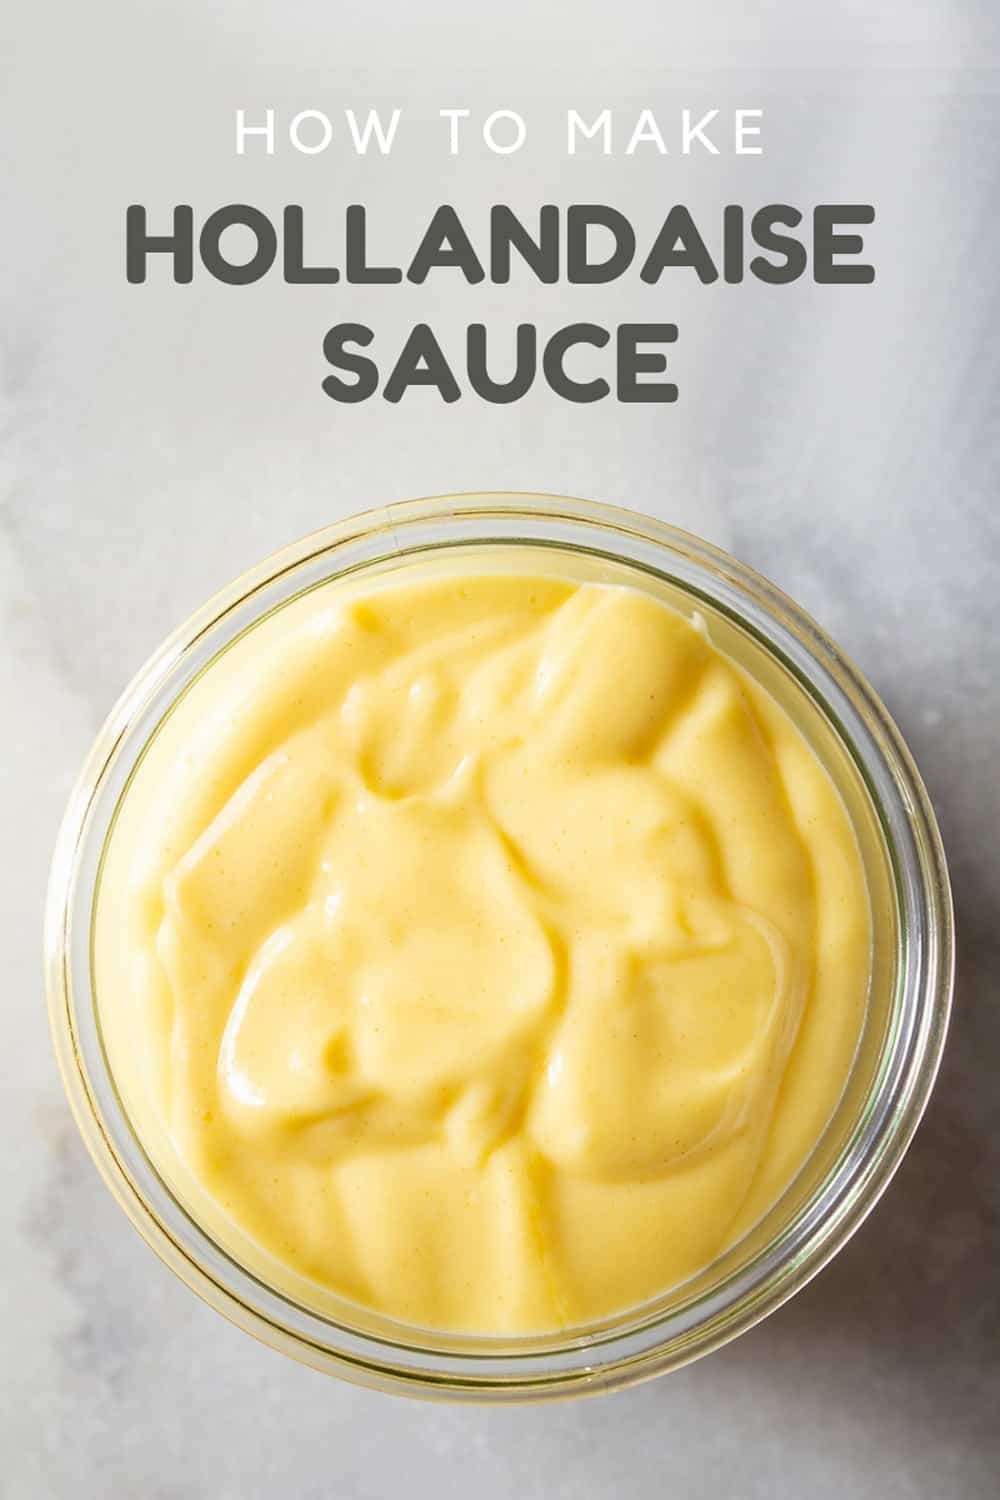 How to Make Hollandaise Sauce